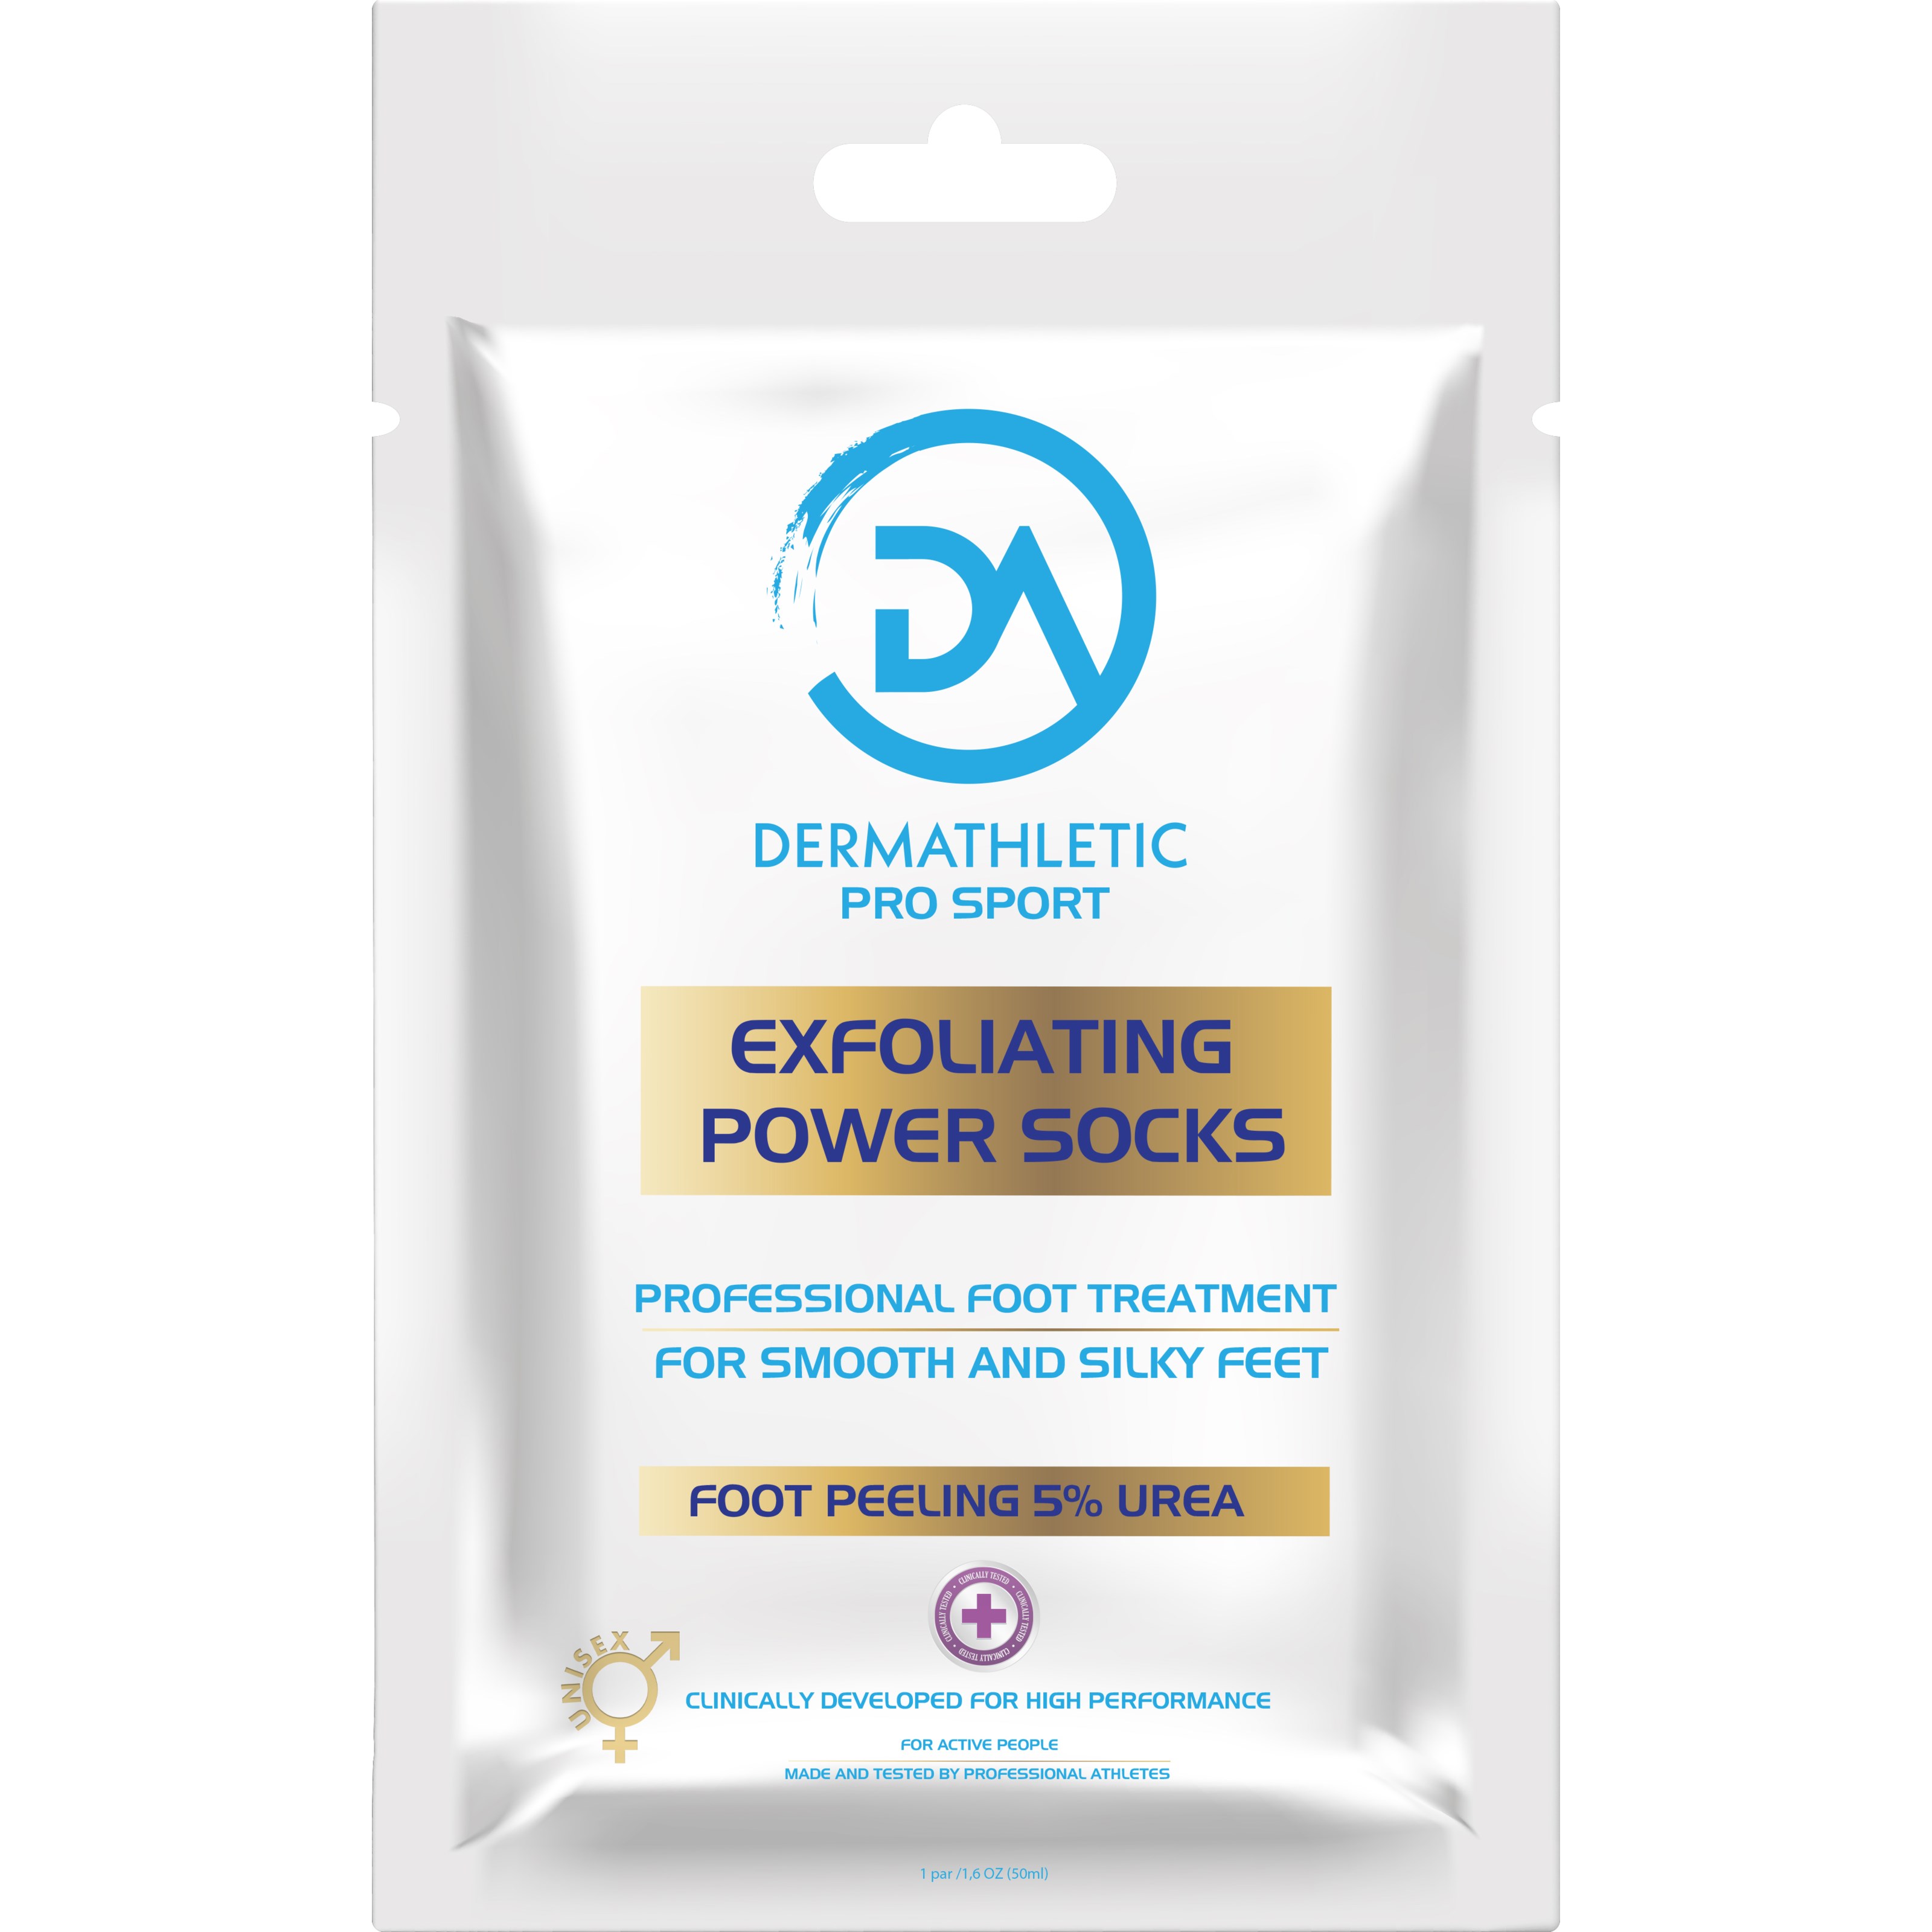 Dermathletic Pro Sport Exfoliating Power Socks